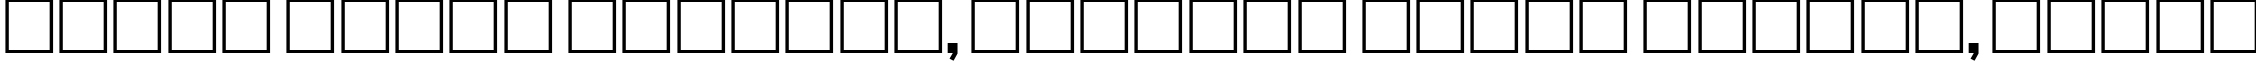 Пример написания шрифтом Rubic текста на белорусском